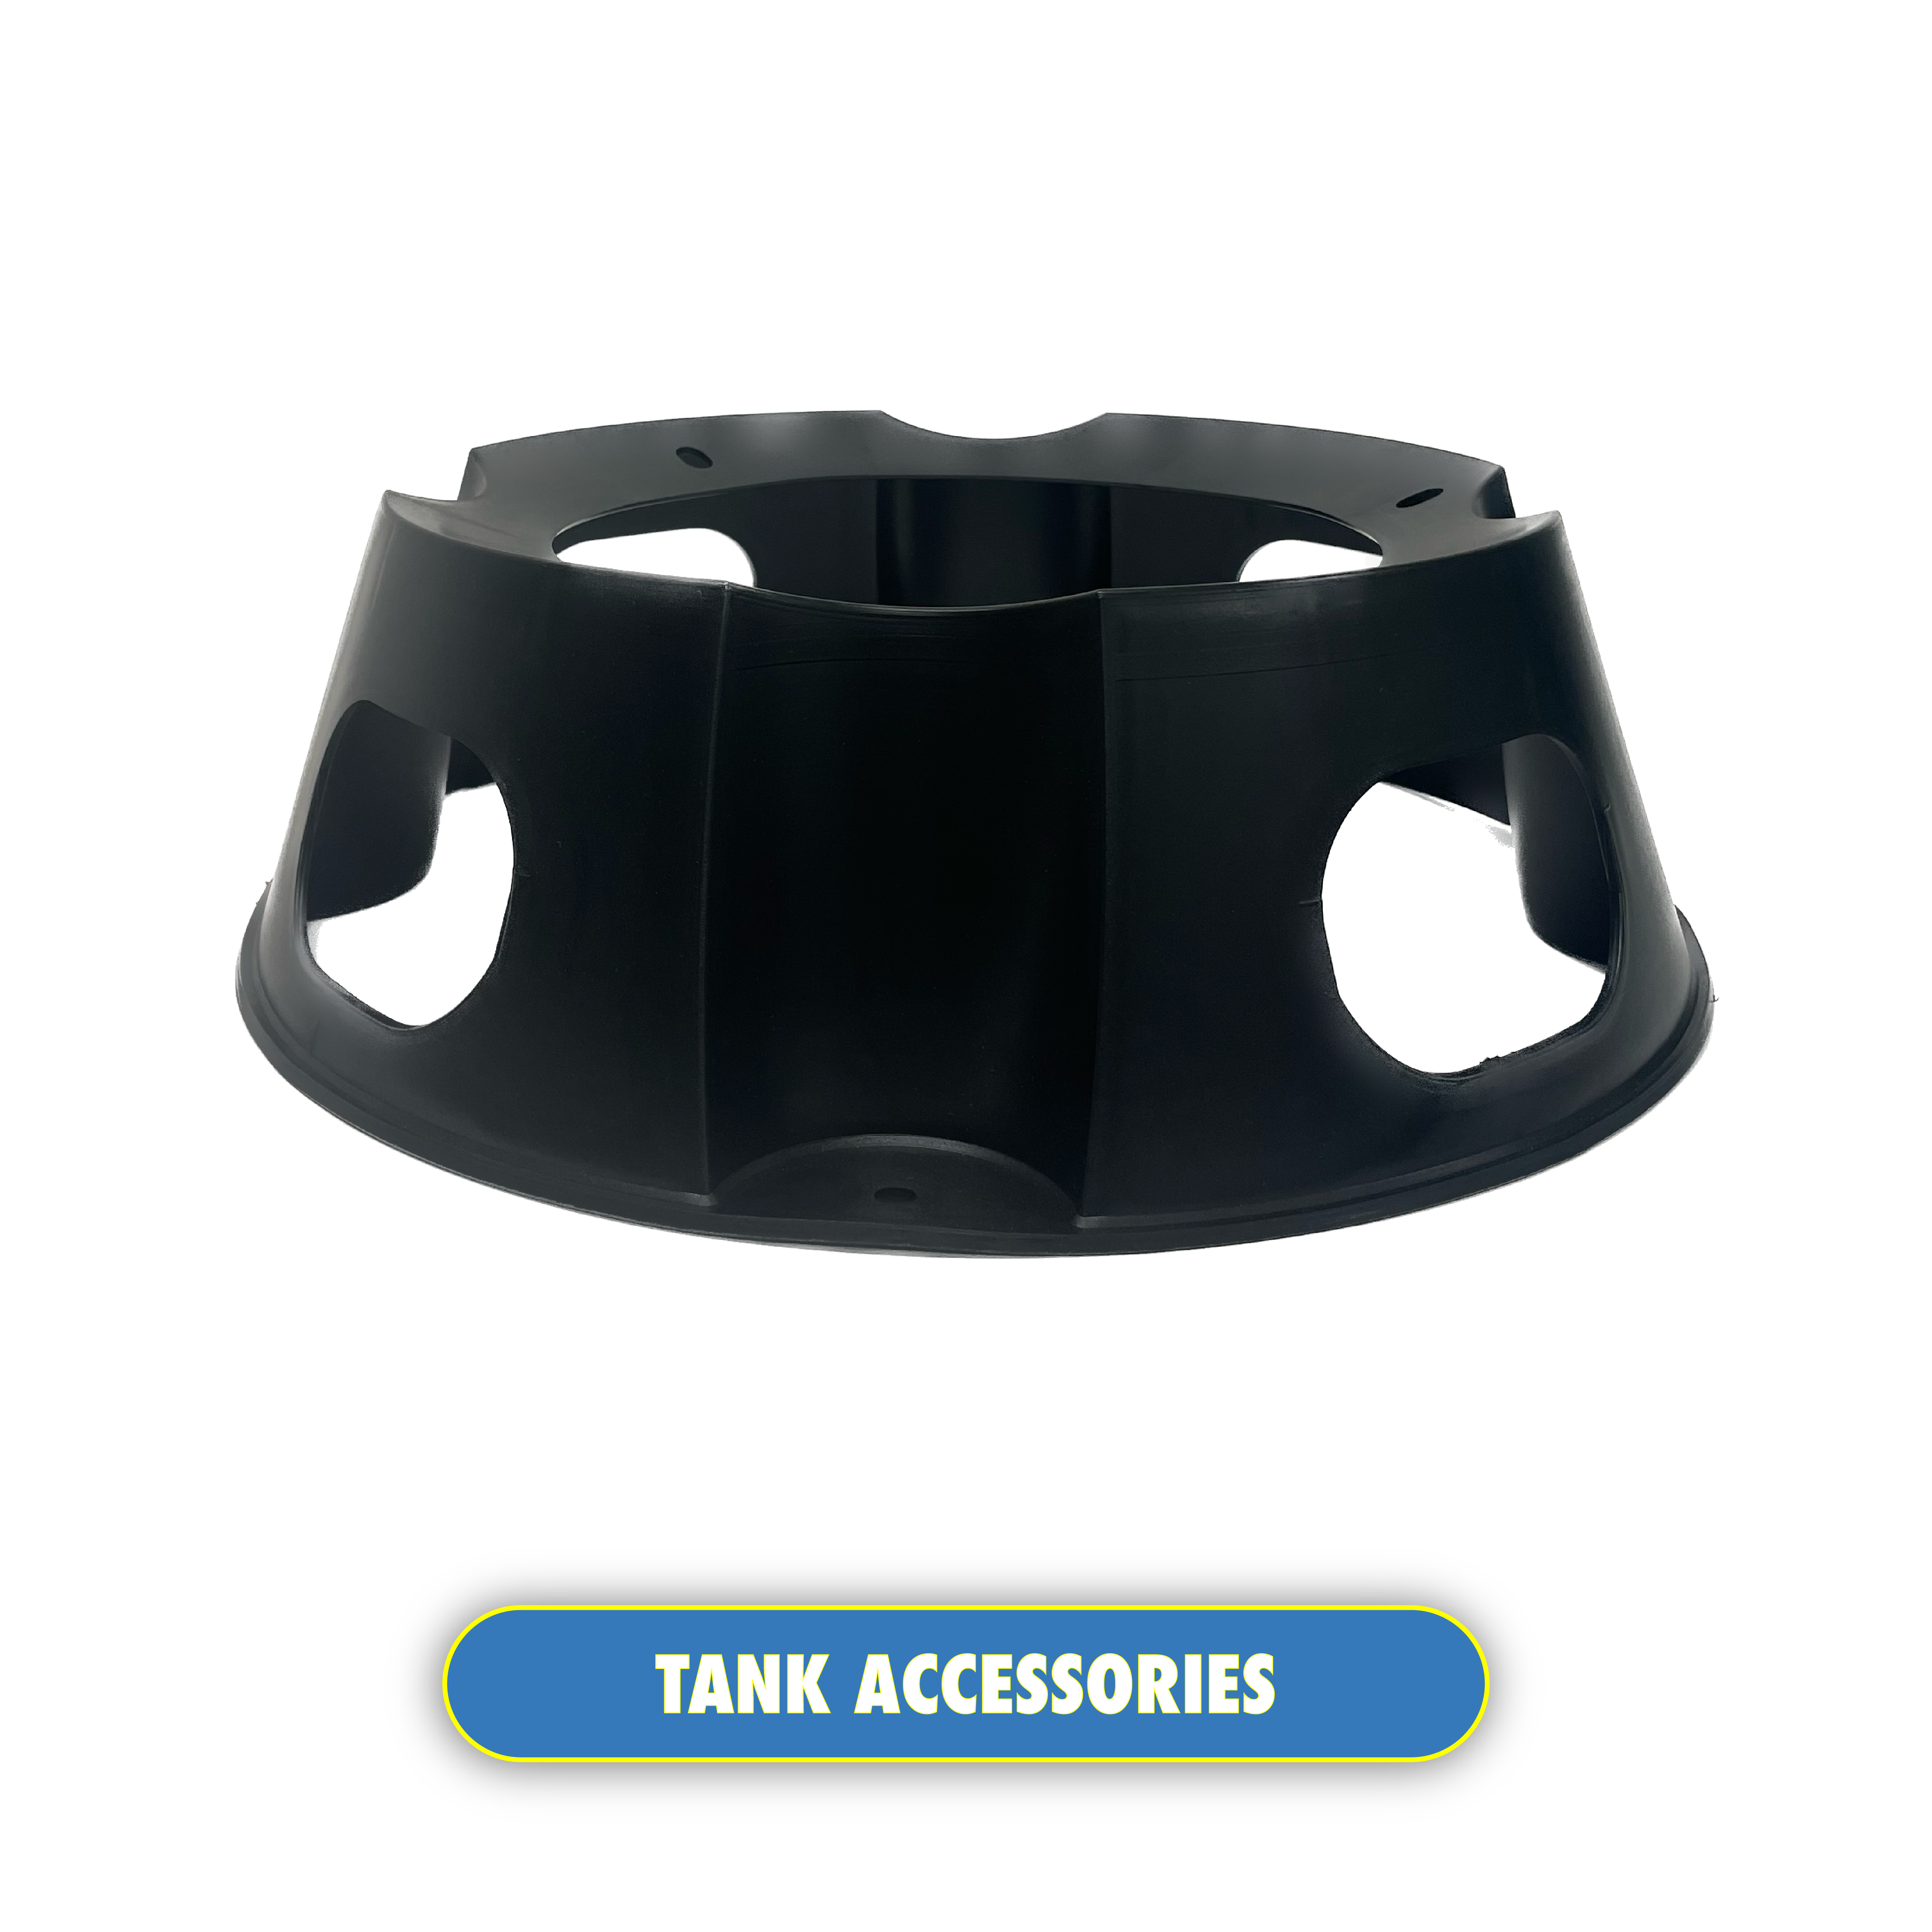 Tank accessories